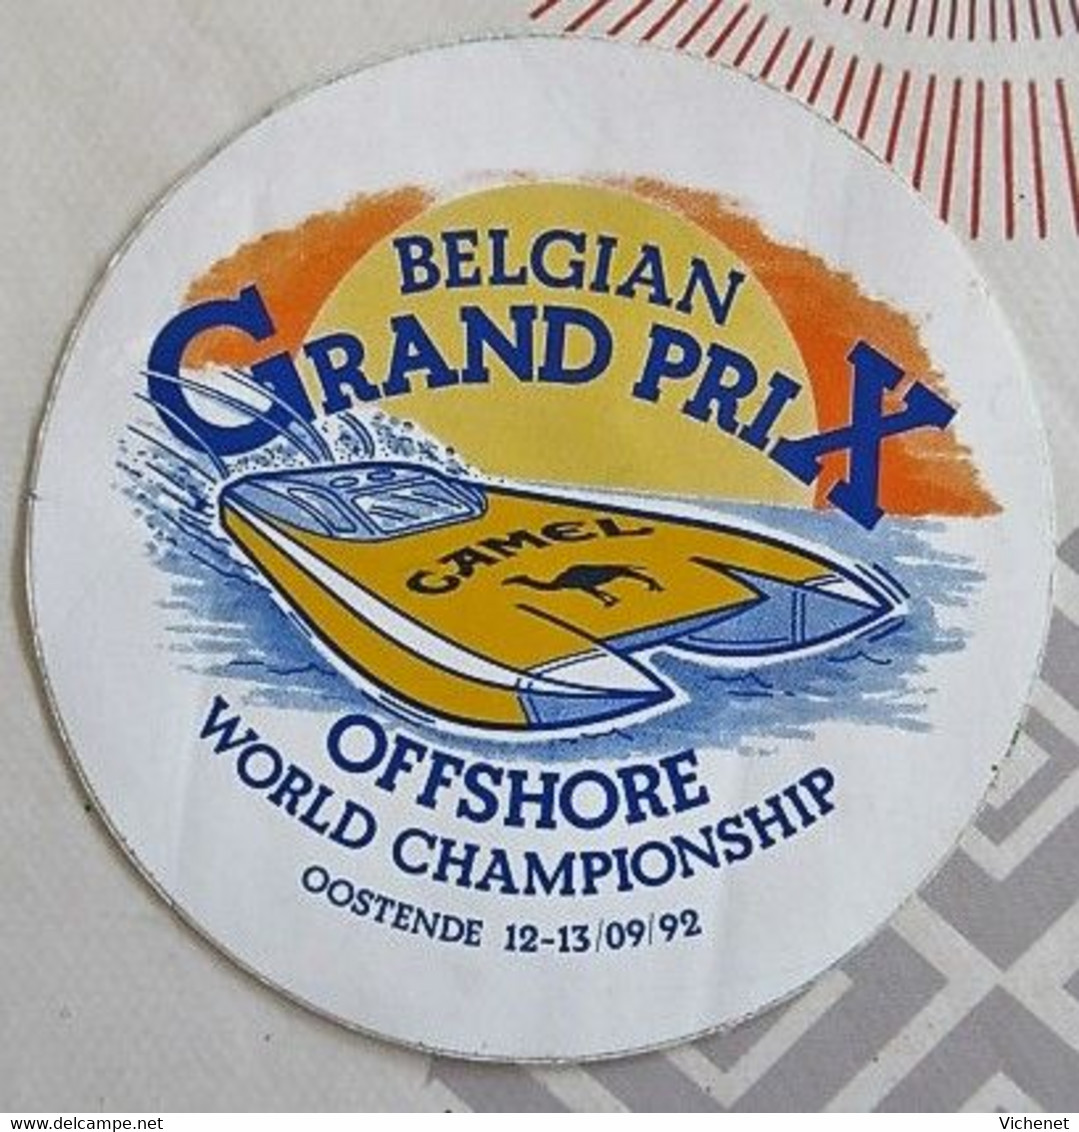 CAMEL - Belgium Grand Prix - Offshore World Championship - Oostende 12-13 / 09 / 92 - Werbeartikel